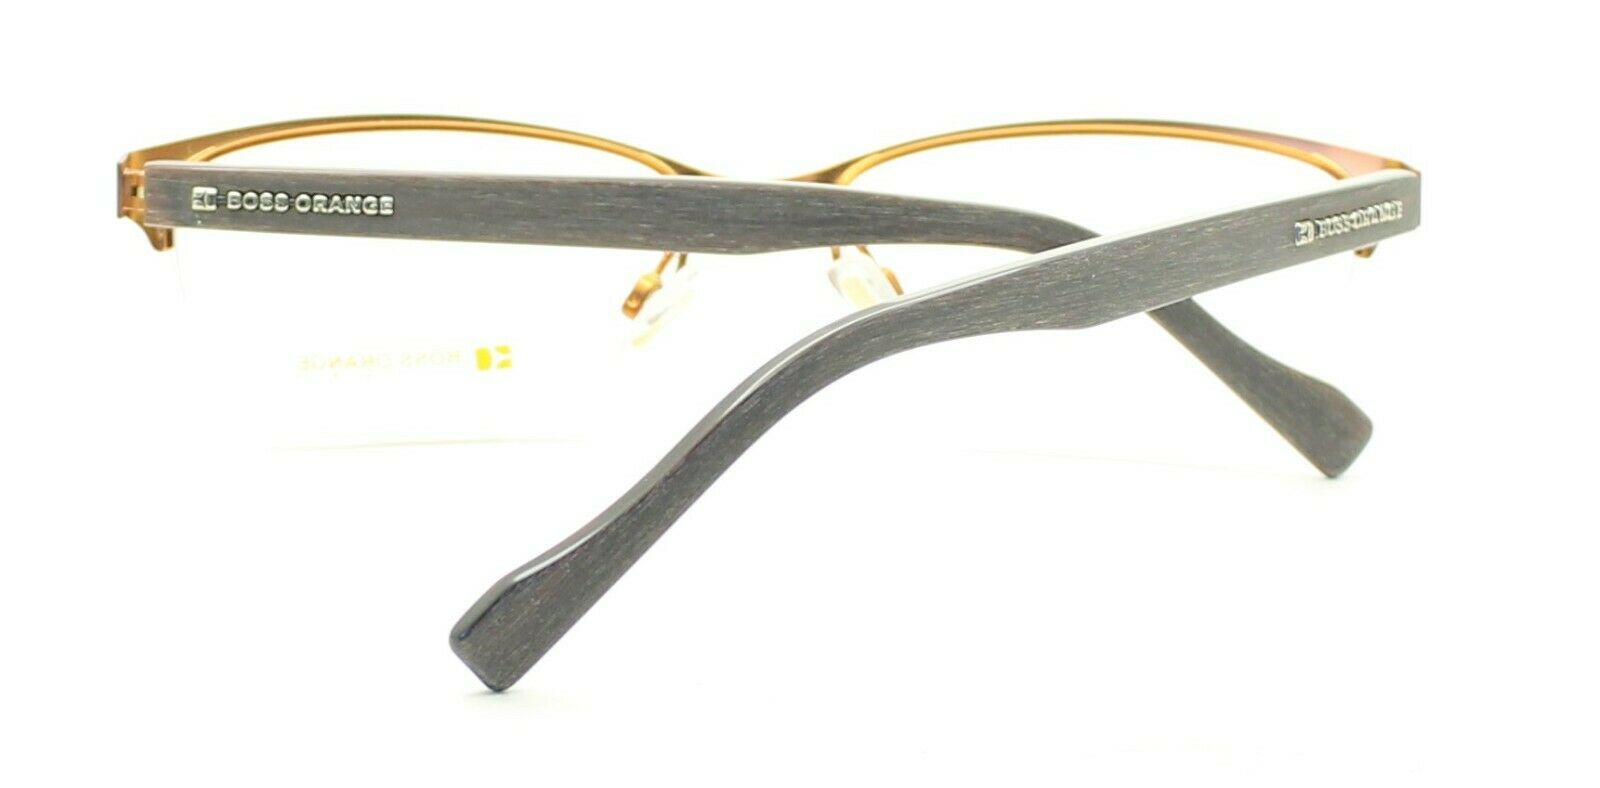 BOSS ORANGE BO 0154 30265448 Eyewear FRAMES RX Optical Glasses Eyeglasses - New